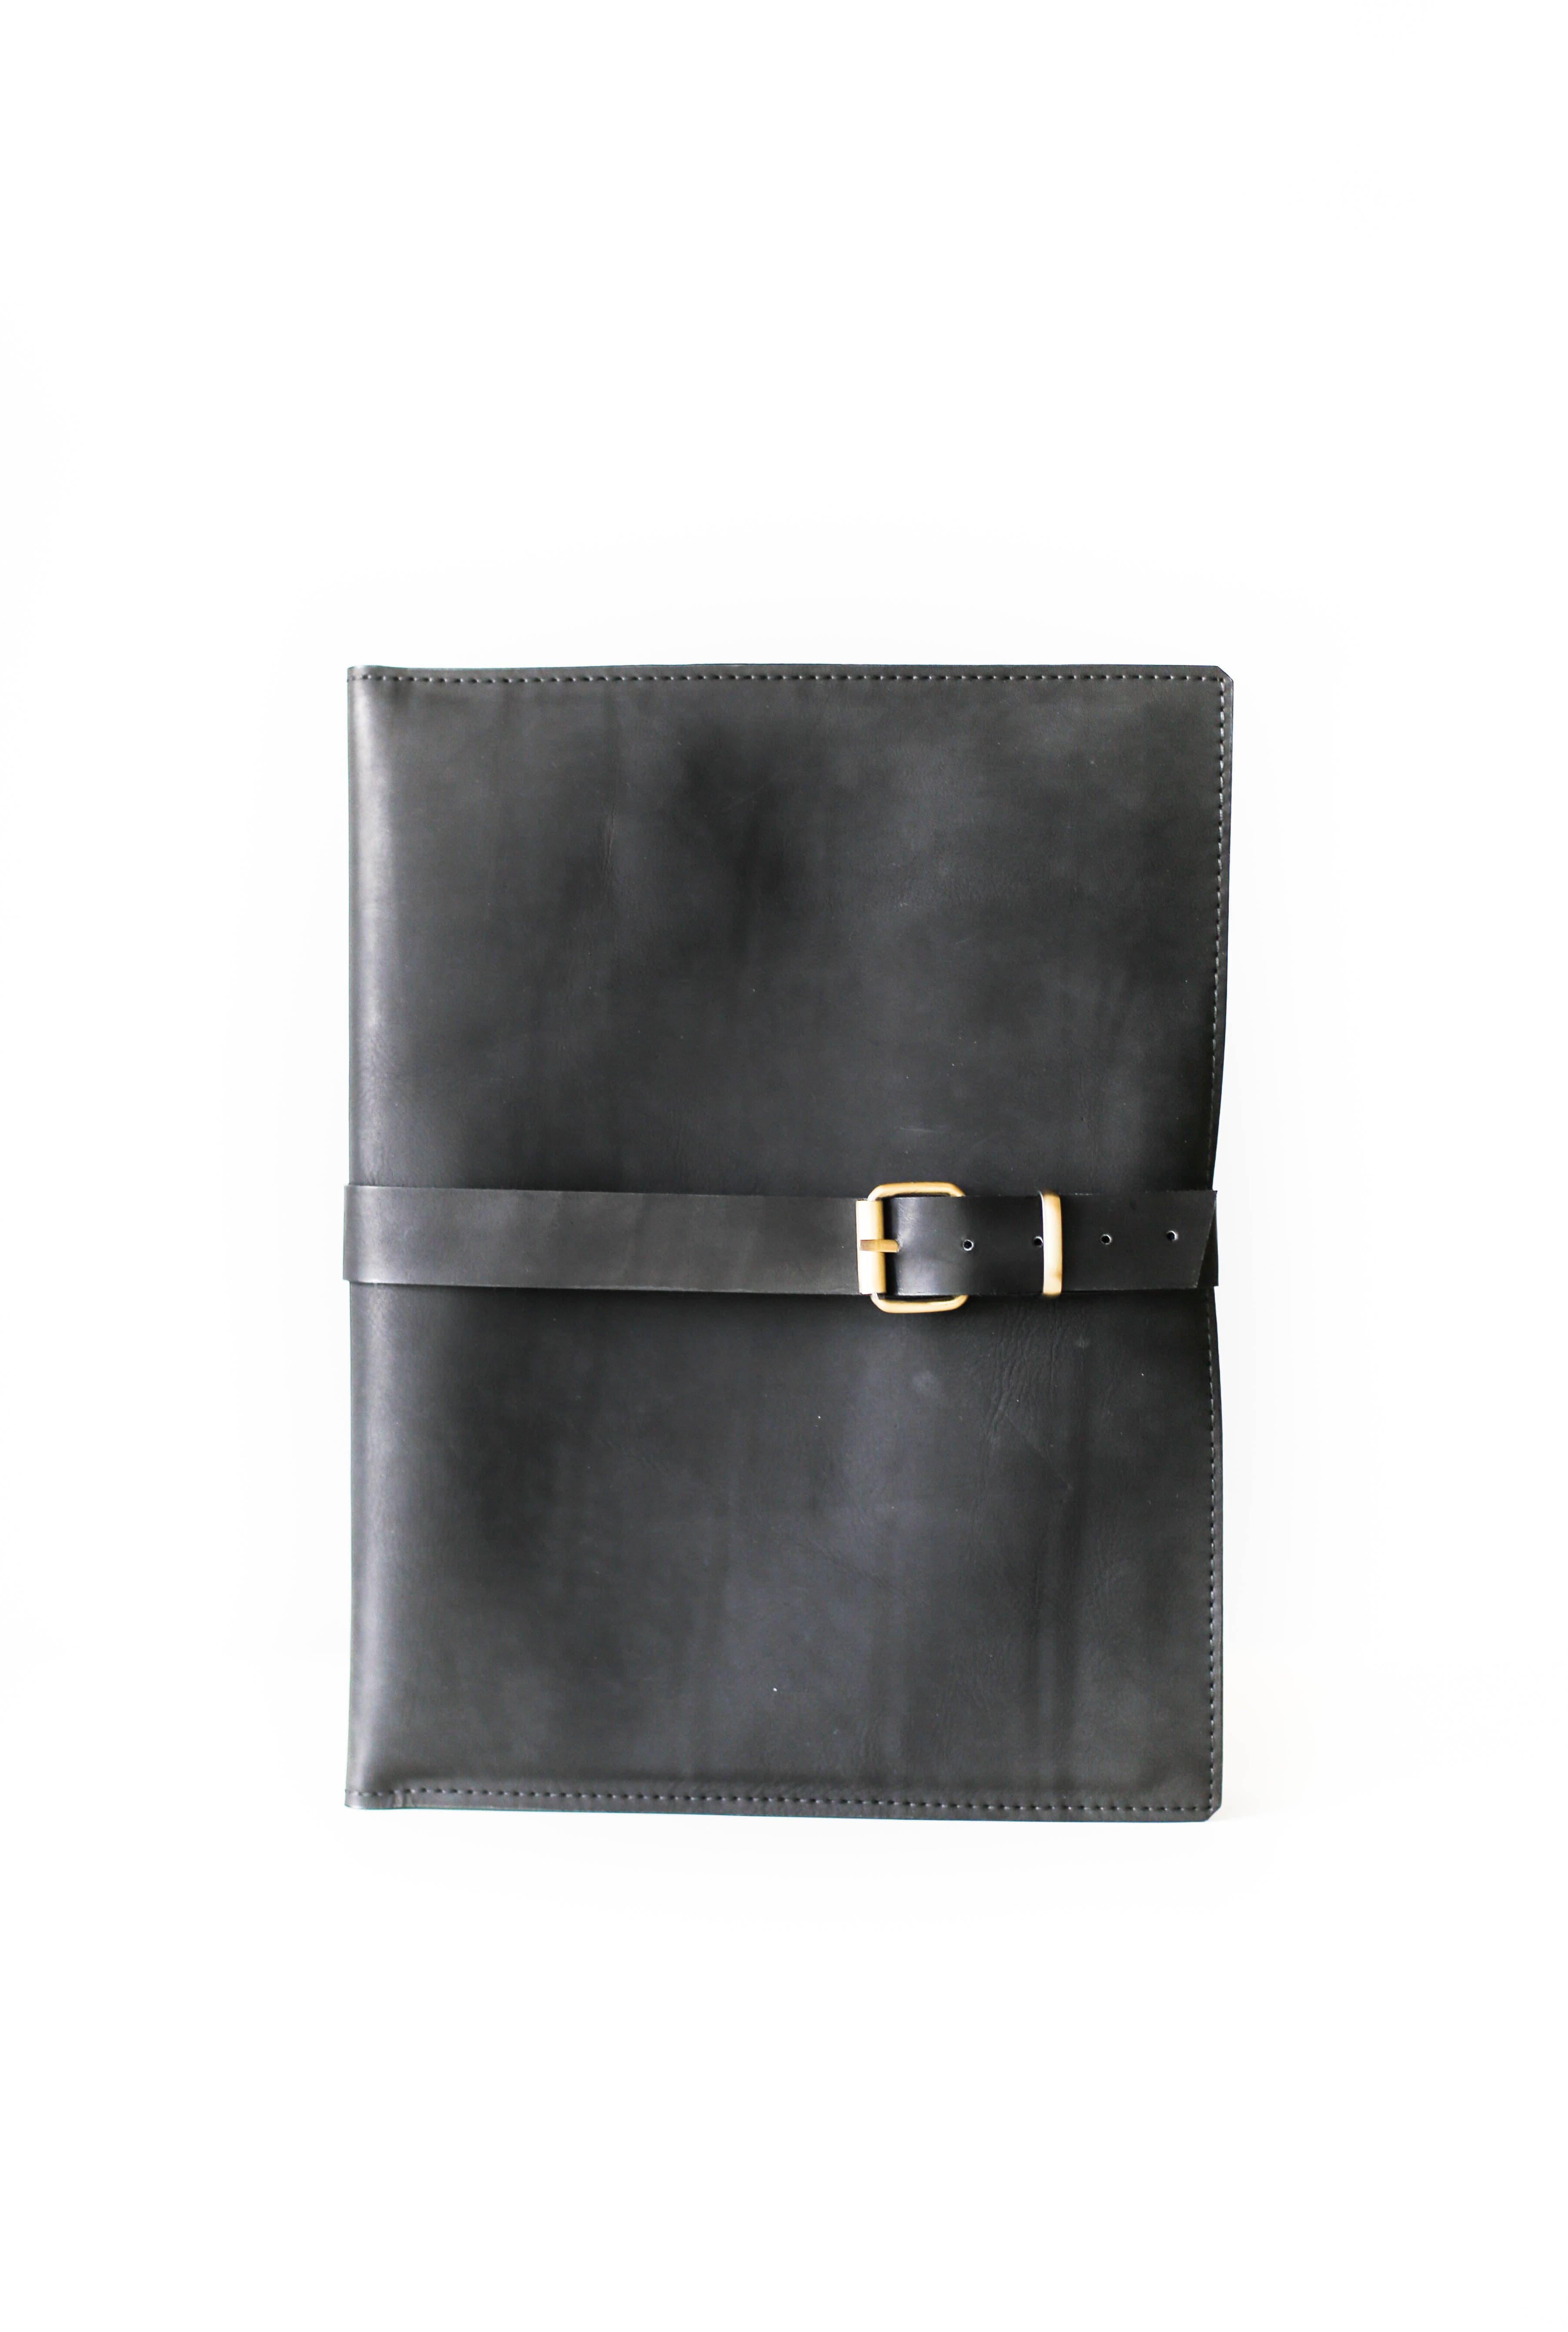 Leather Crossbody Messenger Bag | Leather iPad Messenger Bag — Classy Leather  Bags